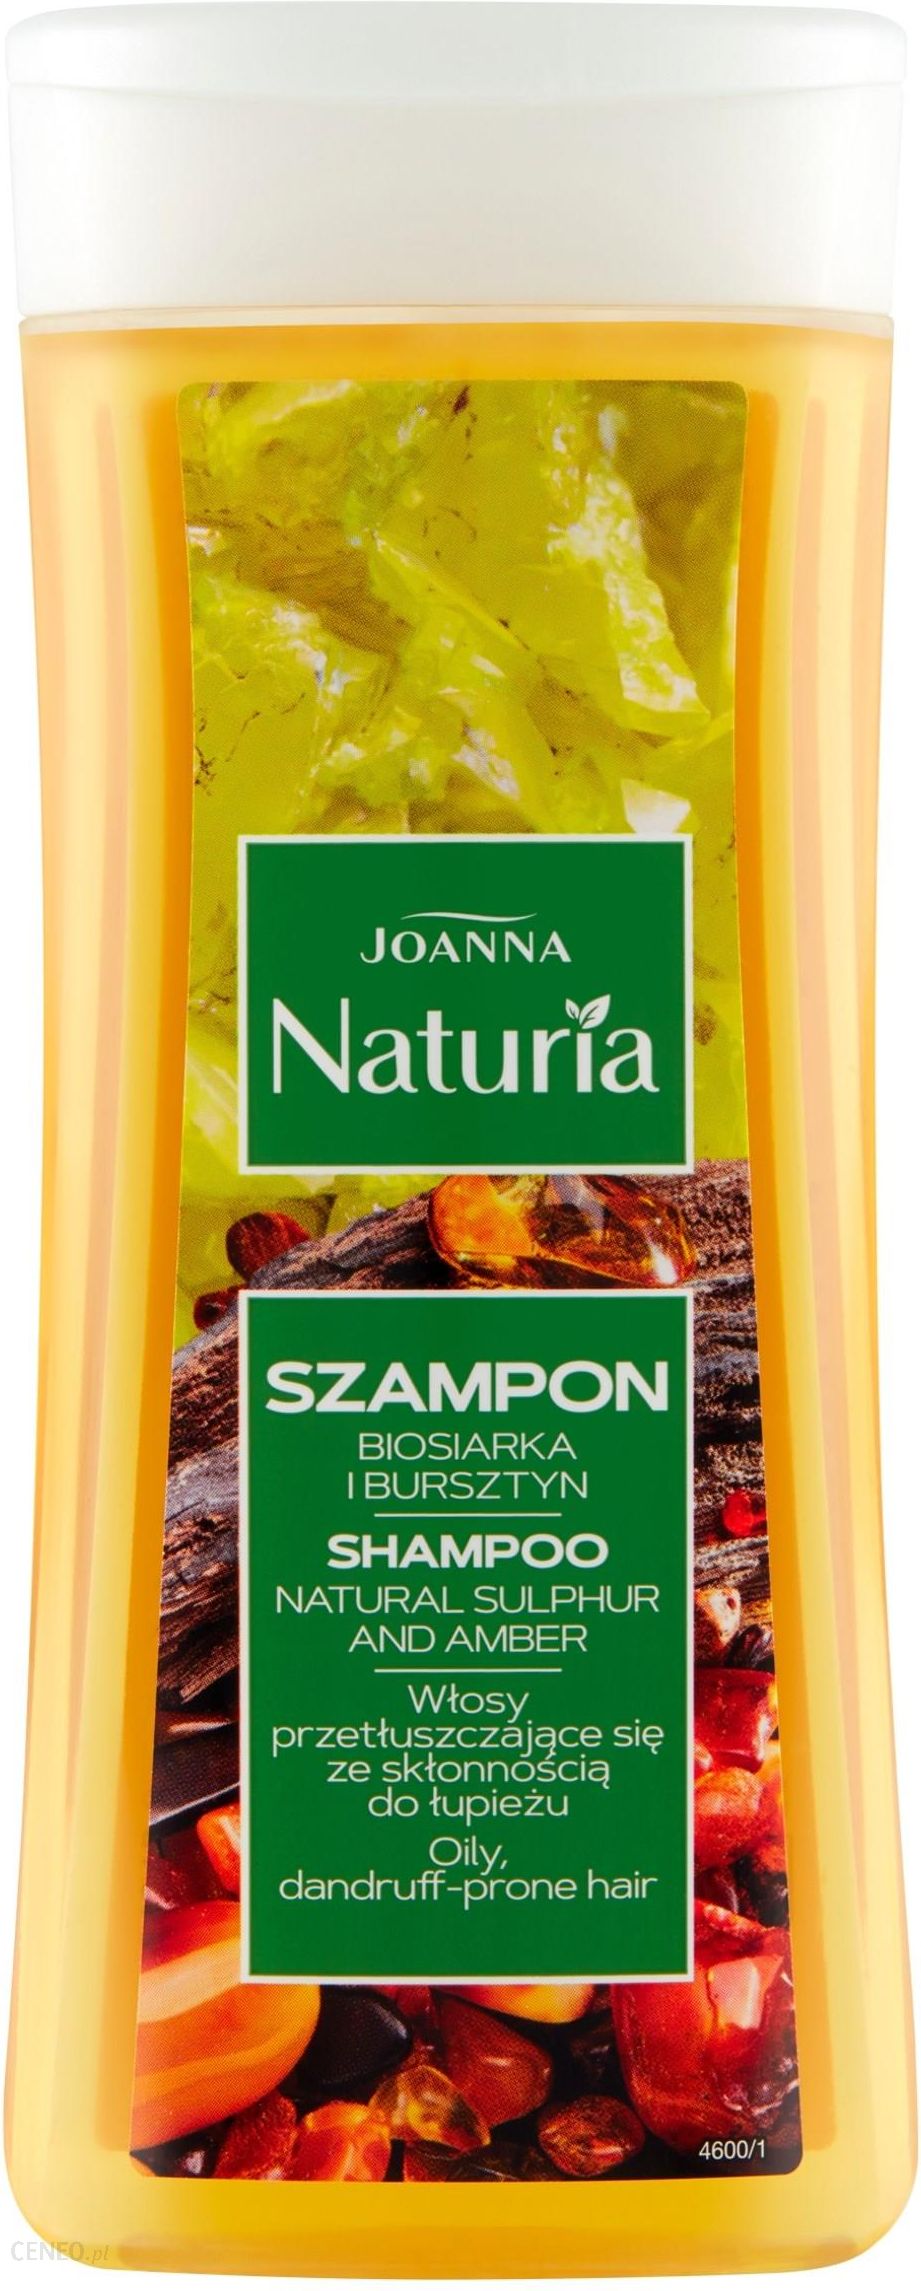 szampon joanna naturia z bursztynem